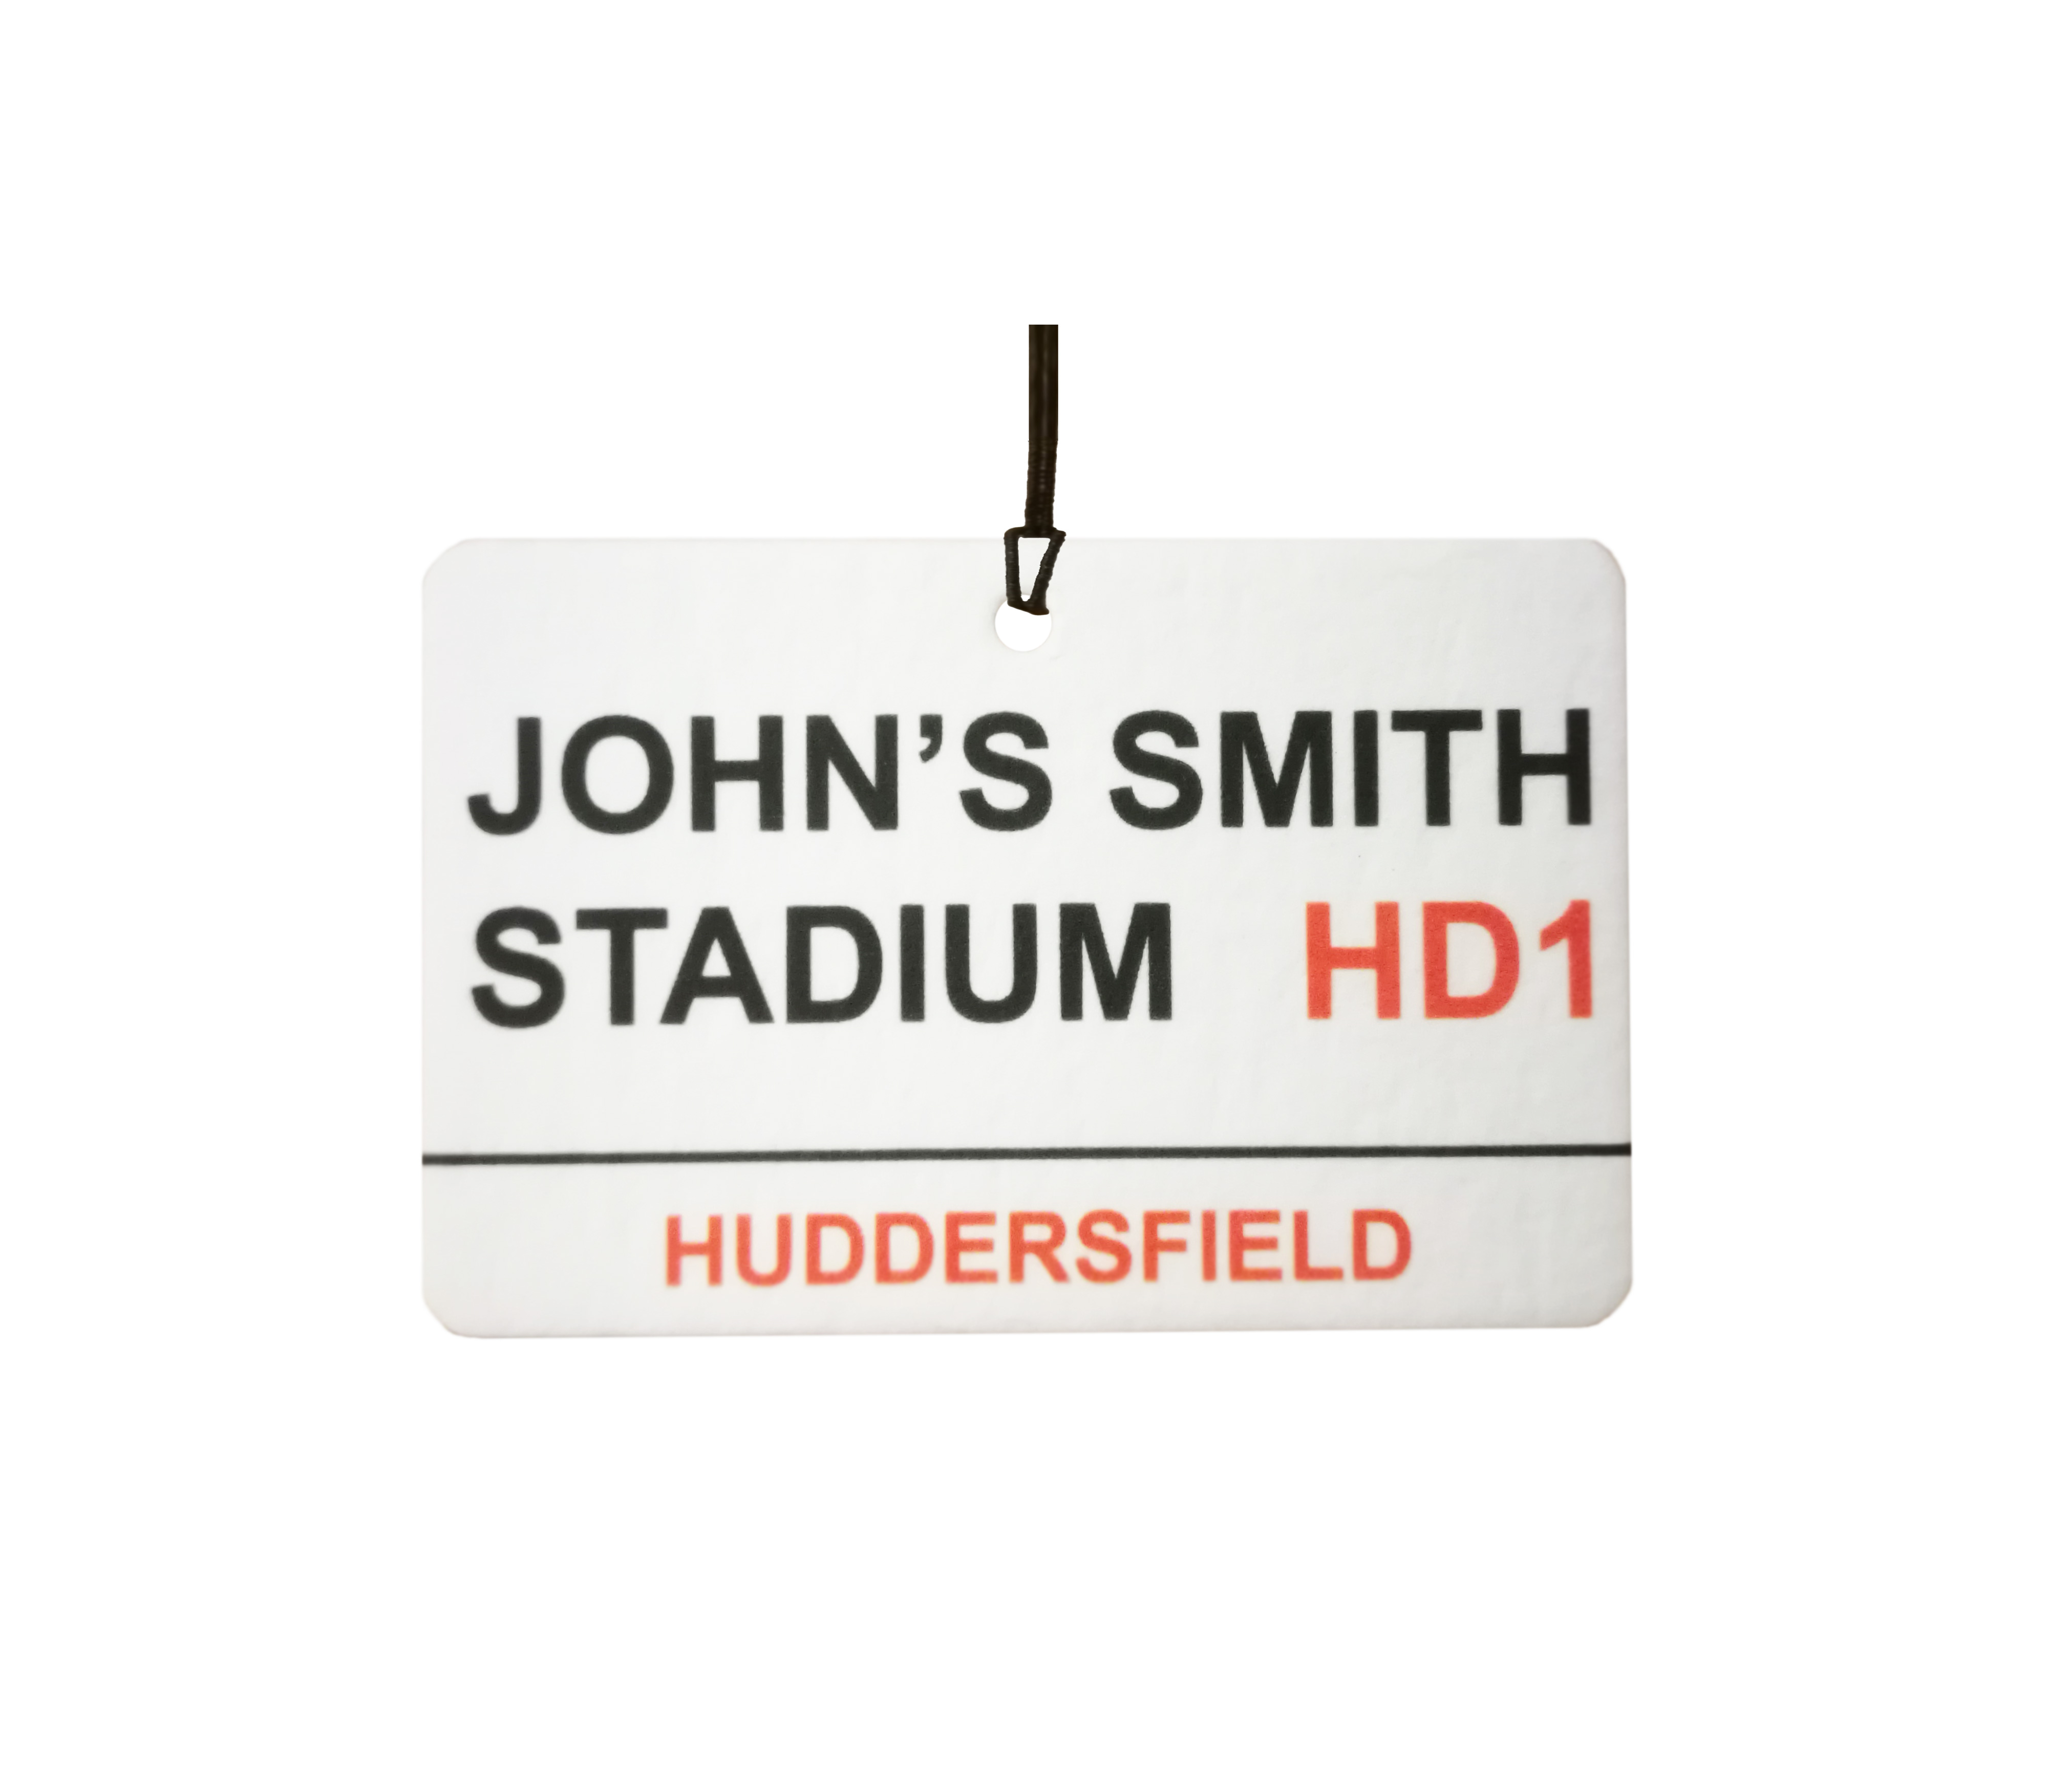 Huddersfield / John's Smith Stadium Street Sign